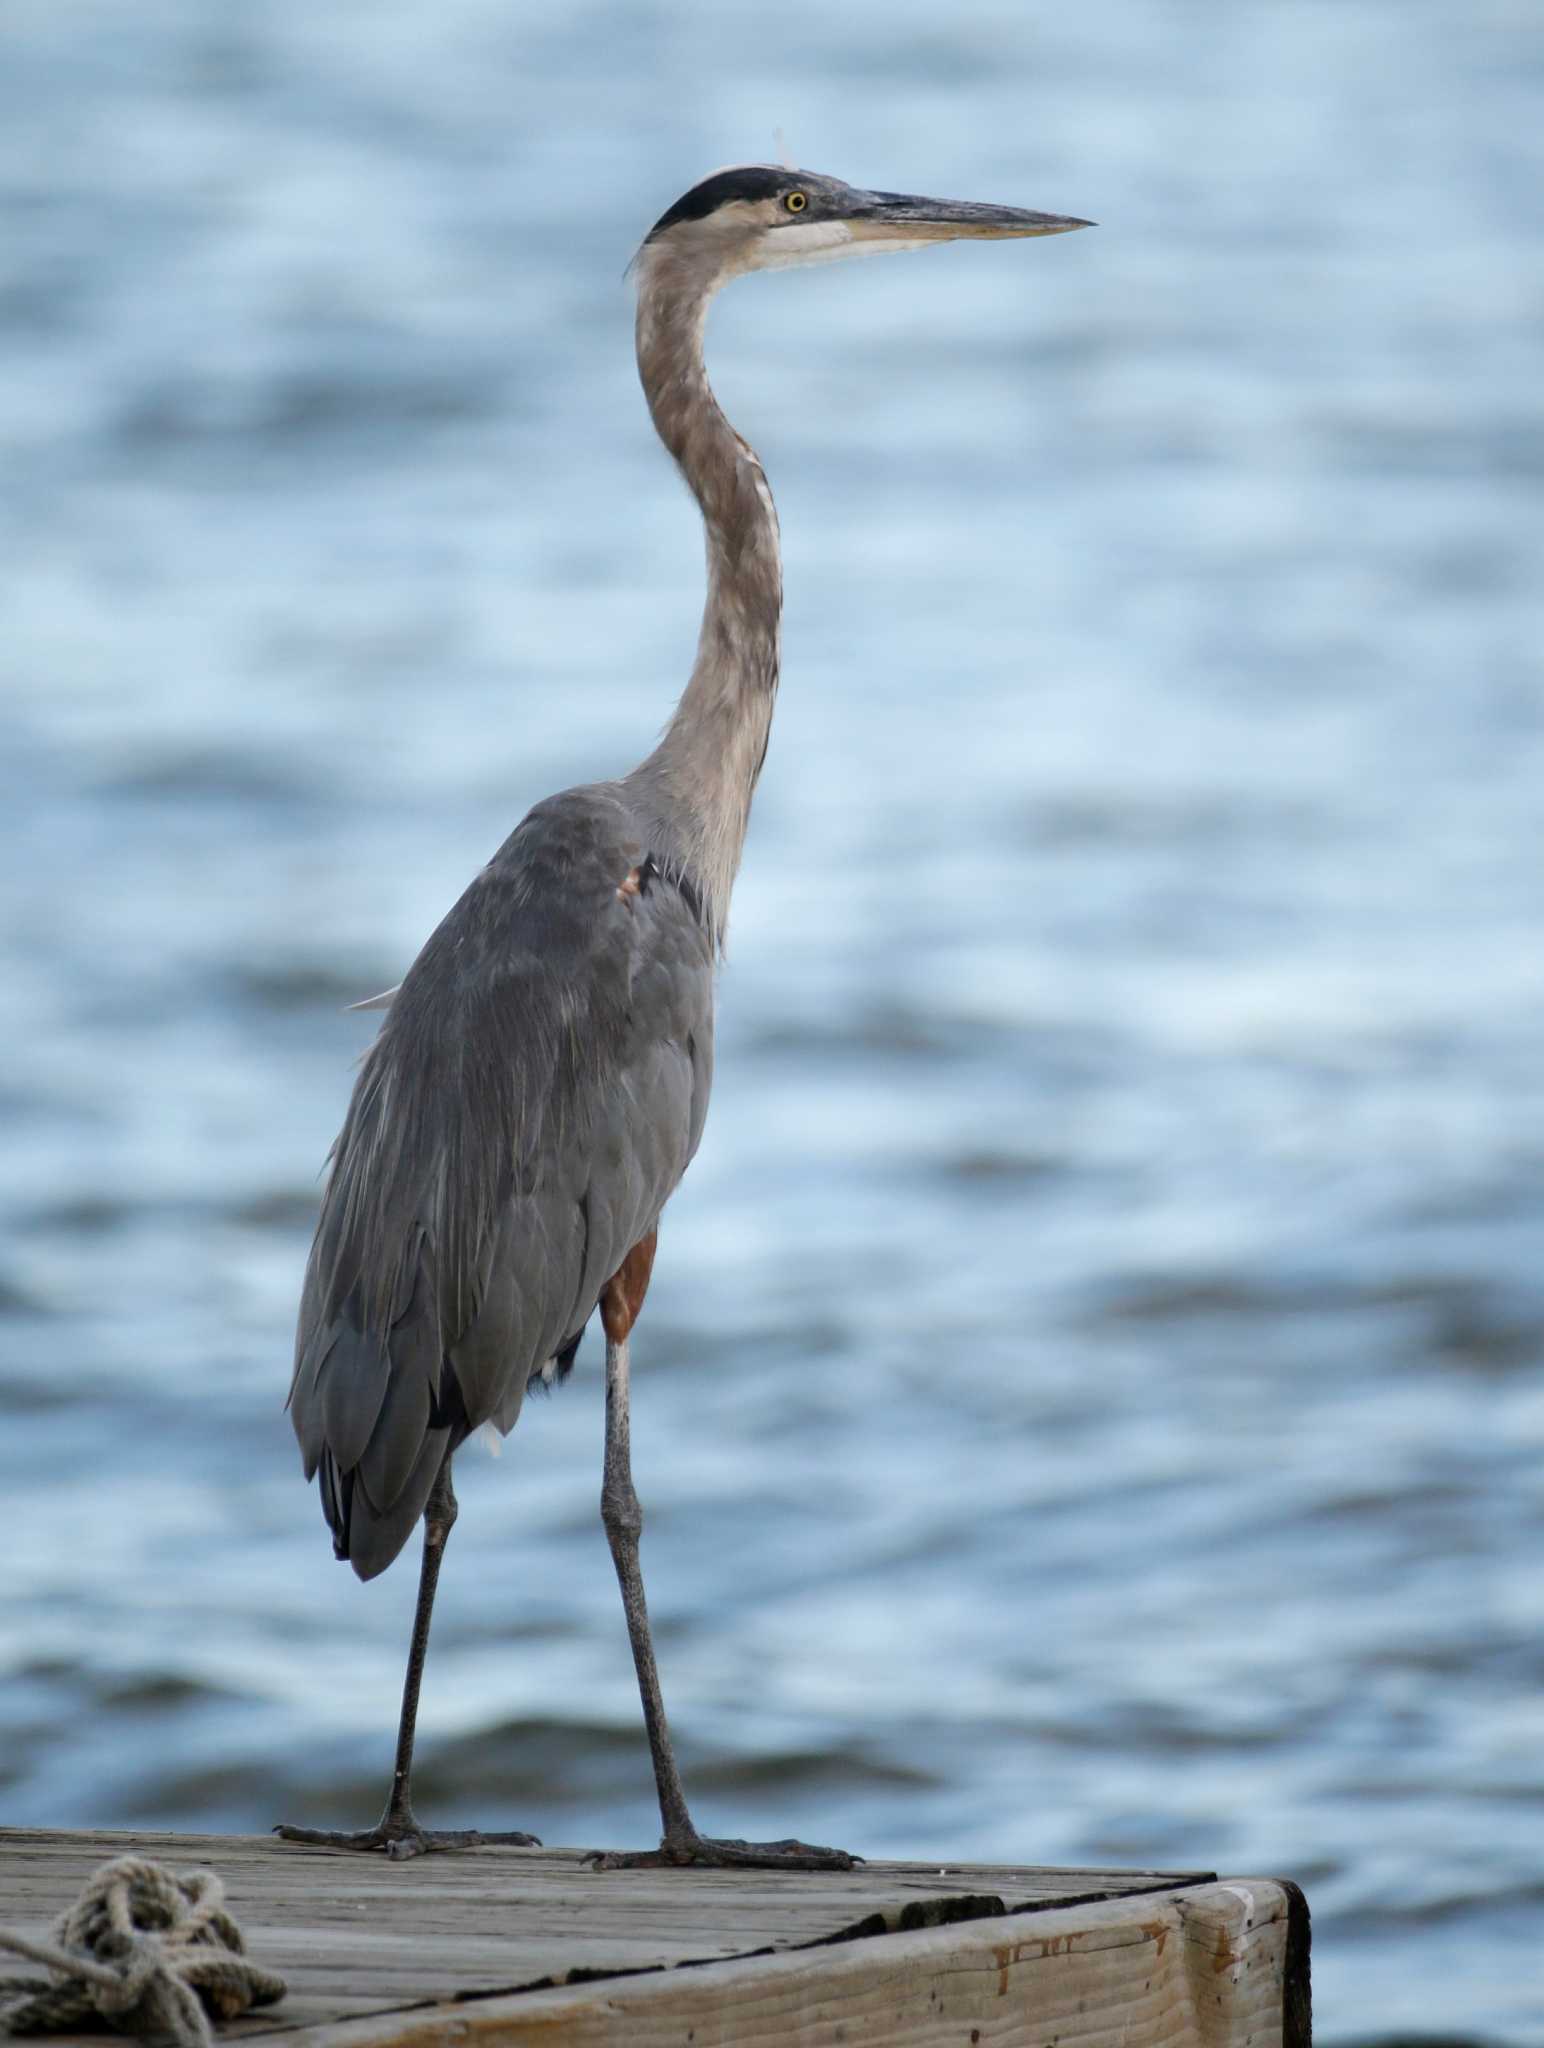 Erosion threatens bird habitat at Lake Conroe - Houston Chronicle